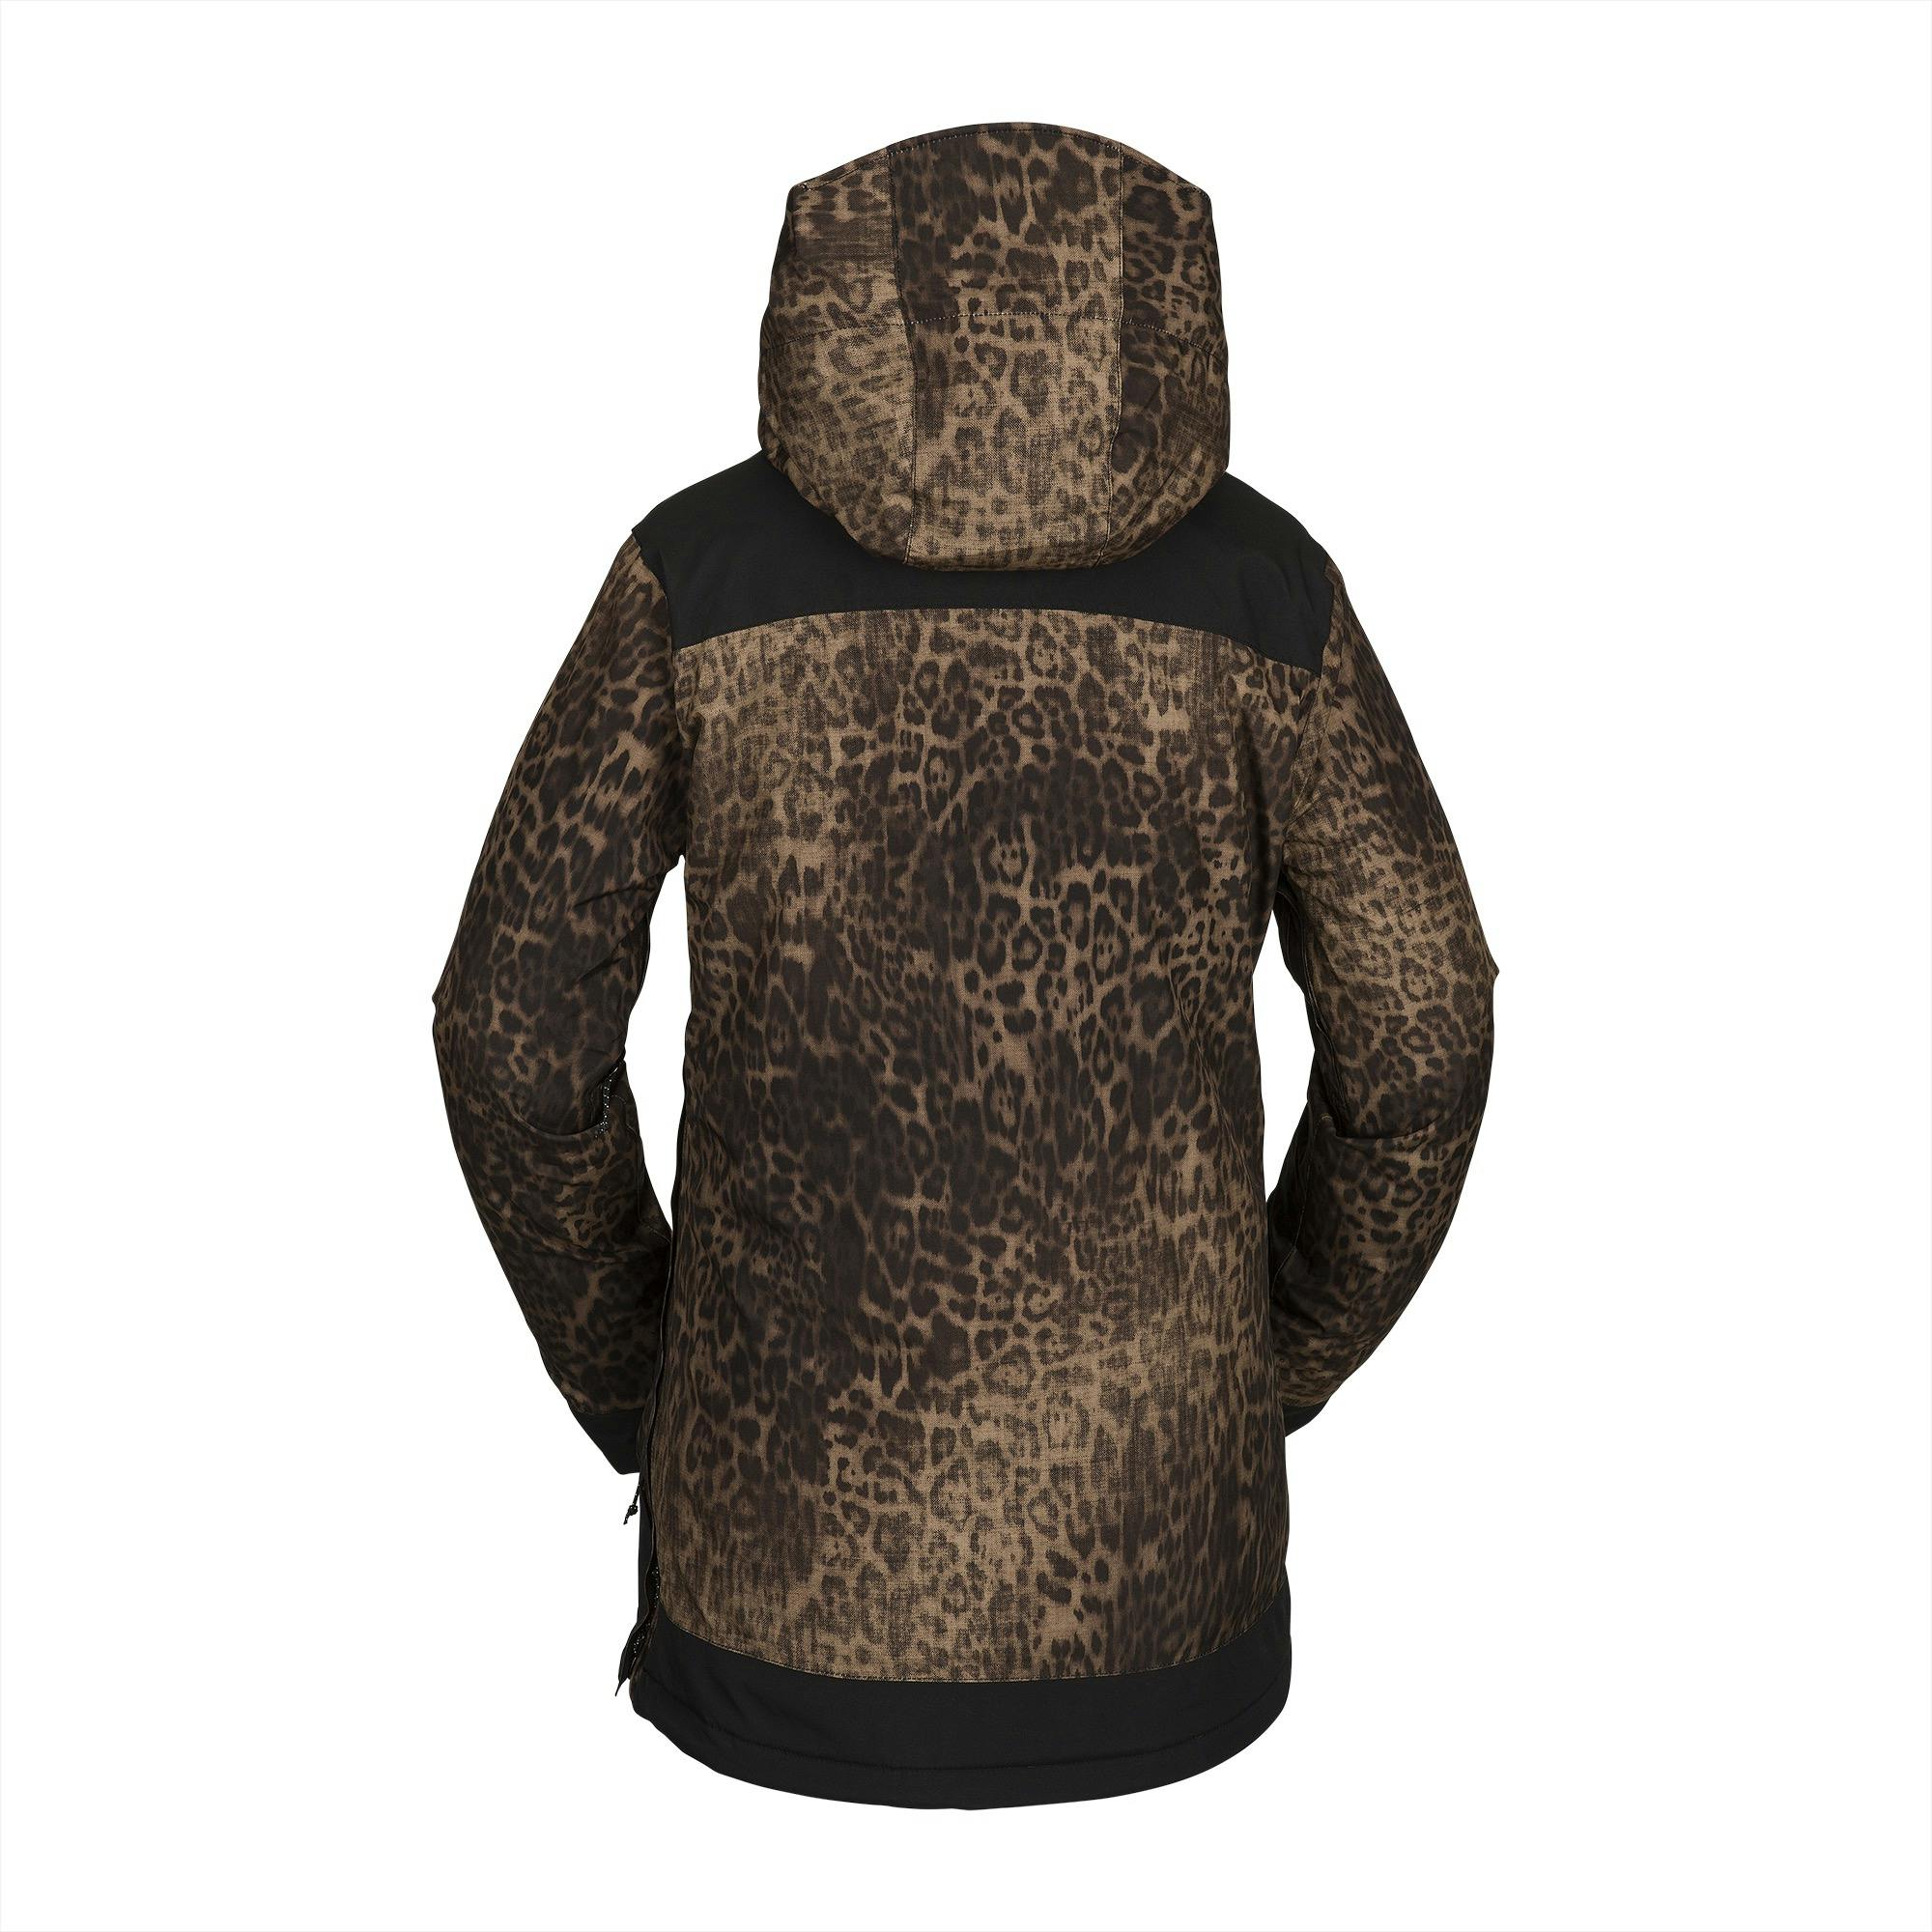 Volcom Women's Fern Insulated GORE-TEX® Pullover